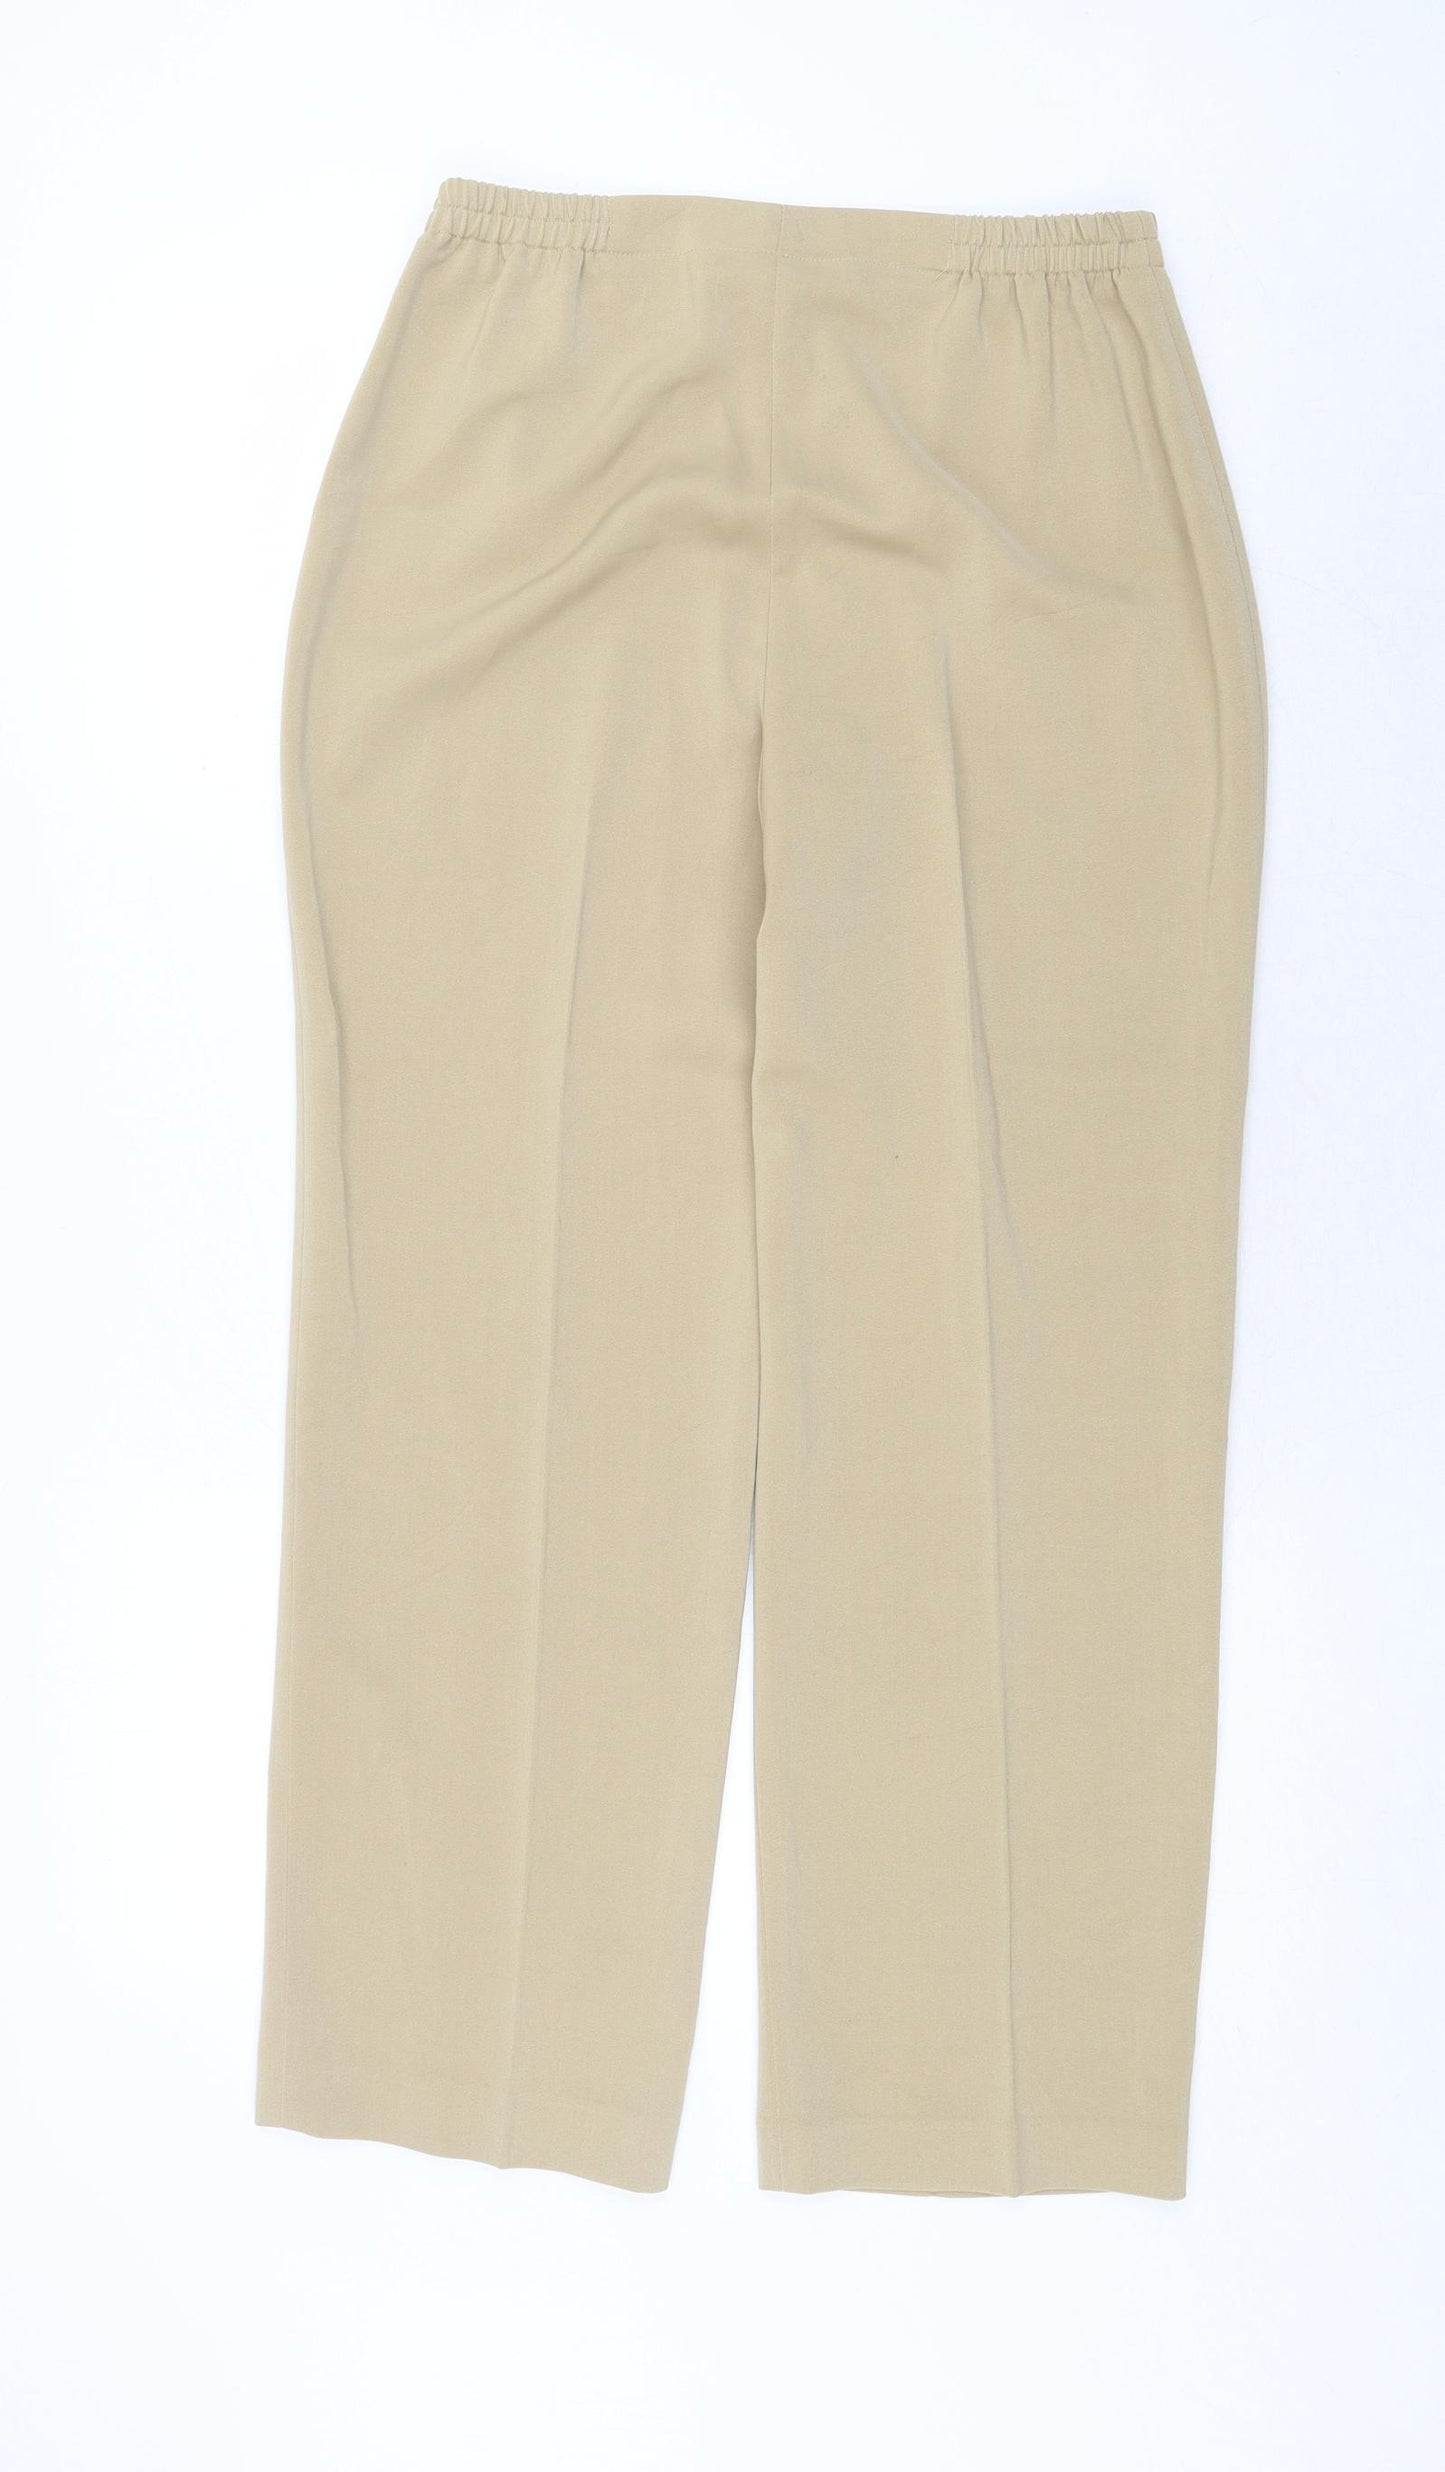 Artigiano Womens Beige Polyester Trousers Size 12 Regular